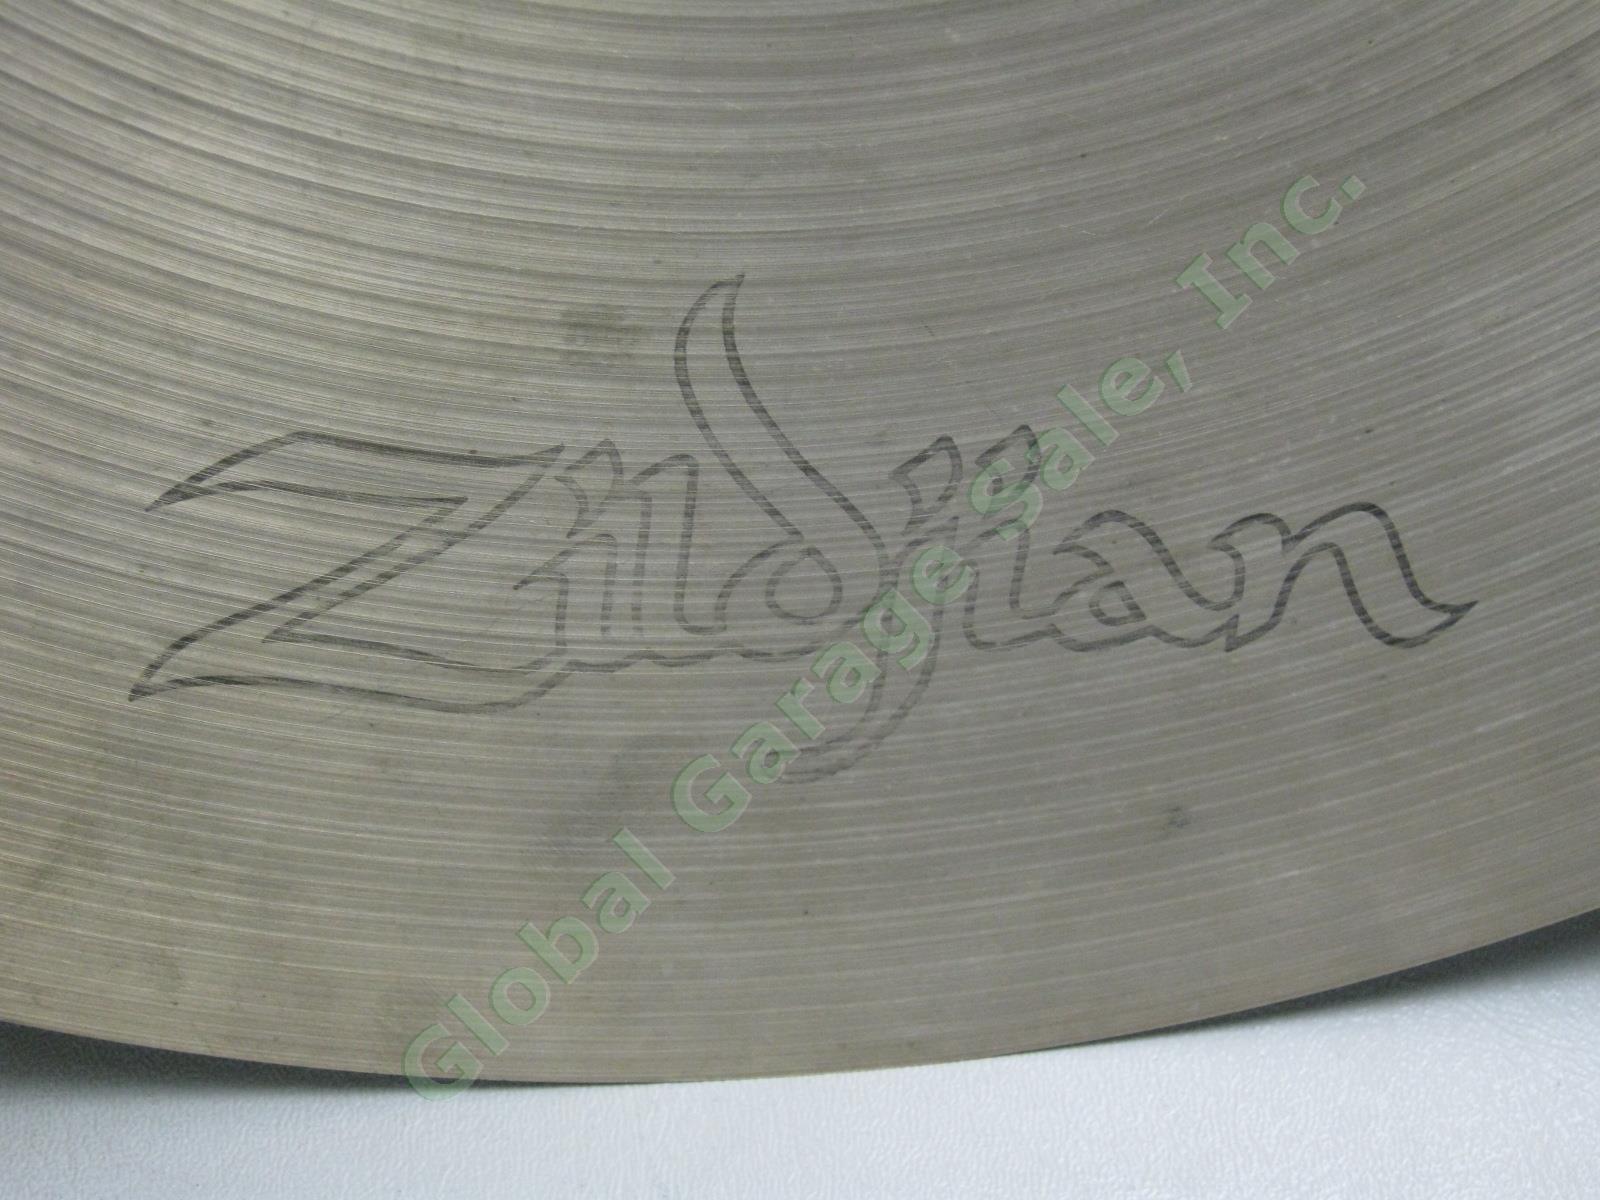 70s 18" Avedis Zildjian Genuine Turkish Crash Ride Cymbal Made In USA 1587 Grams 4